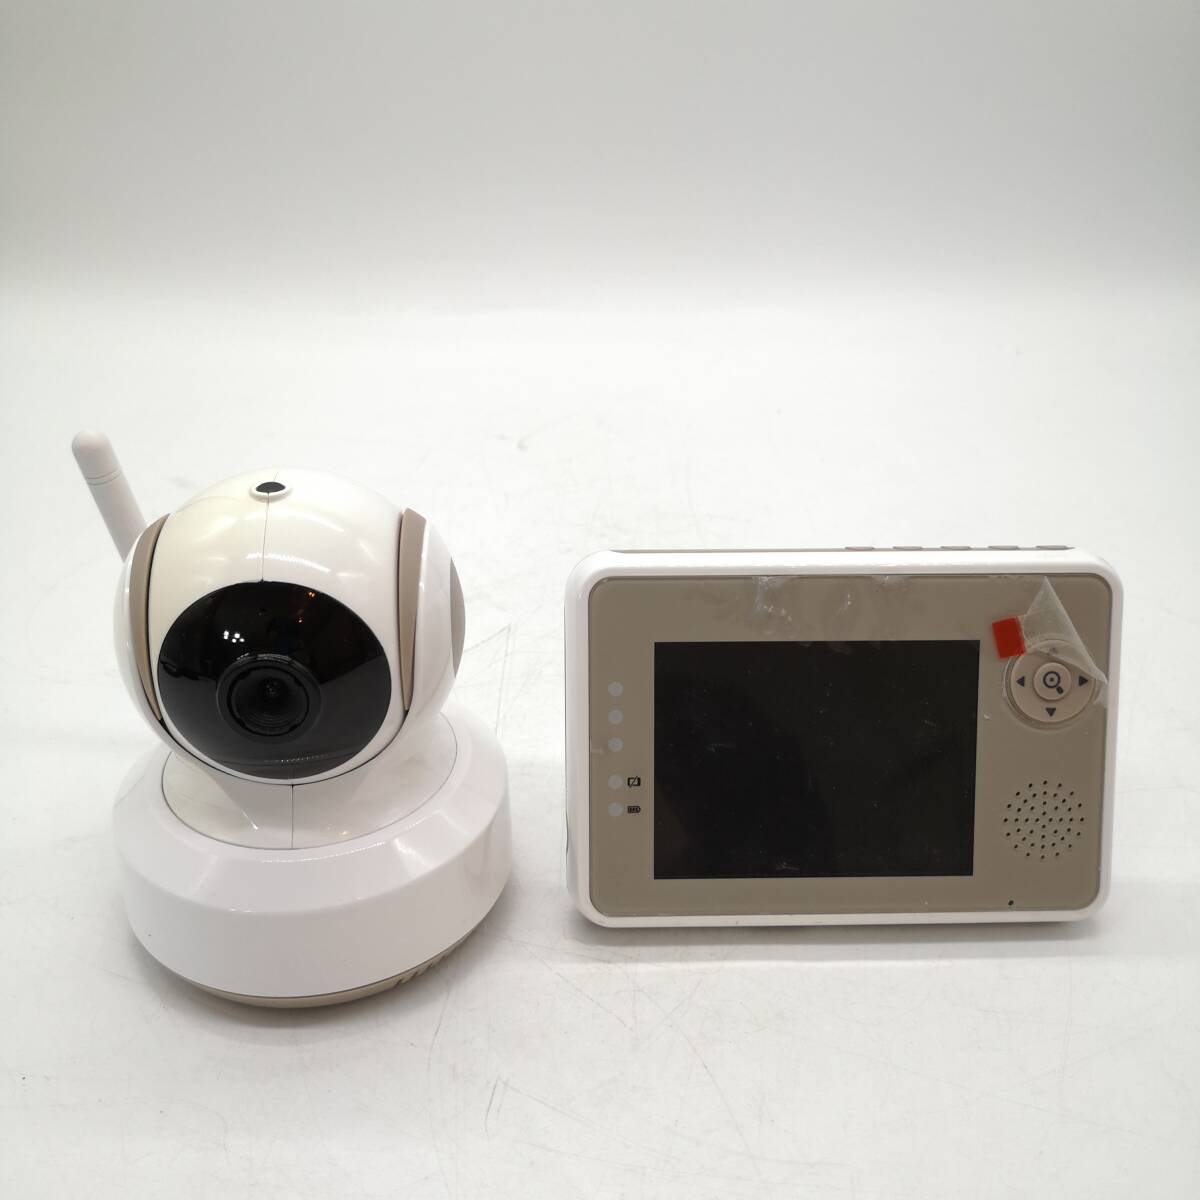  беспроводной baby камера (BM-LTL2) авто тигр  King функция / камера .. функционирование /2way/ voice 202403-F442